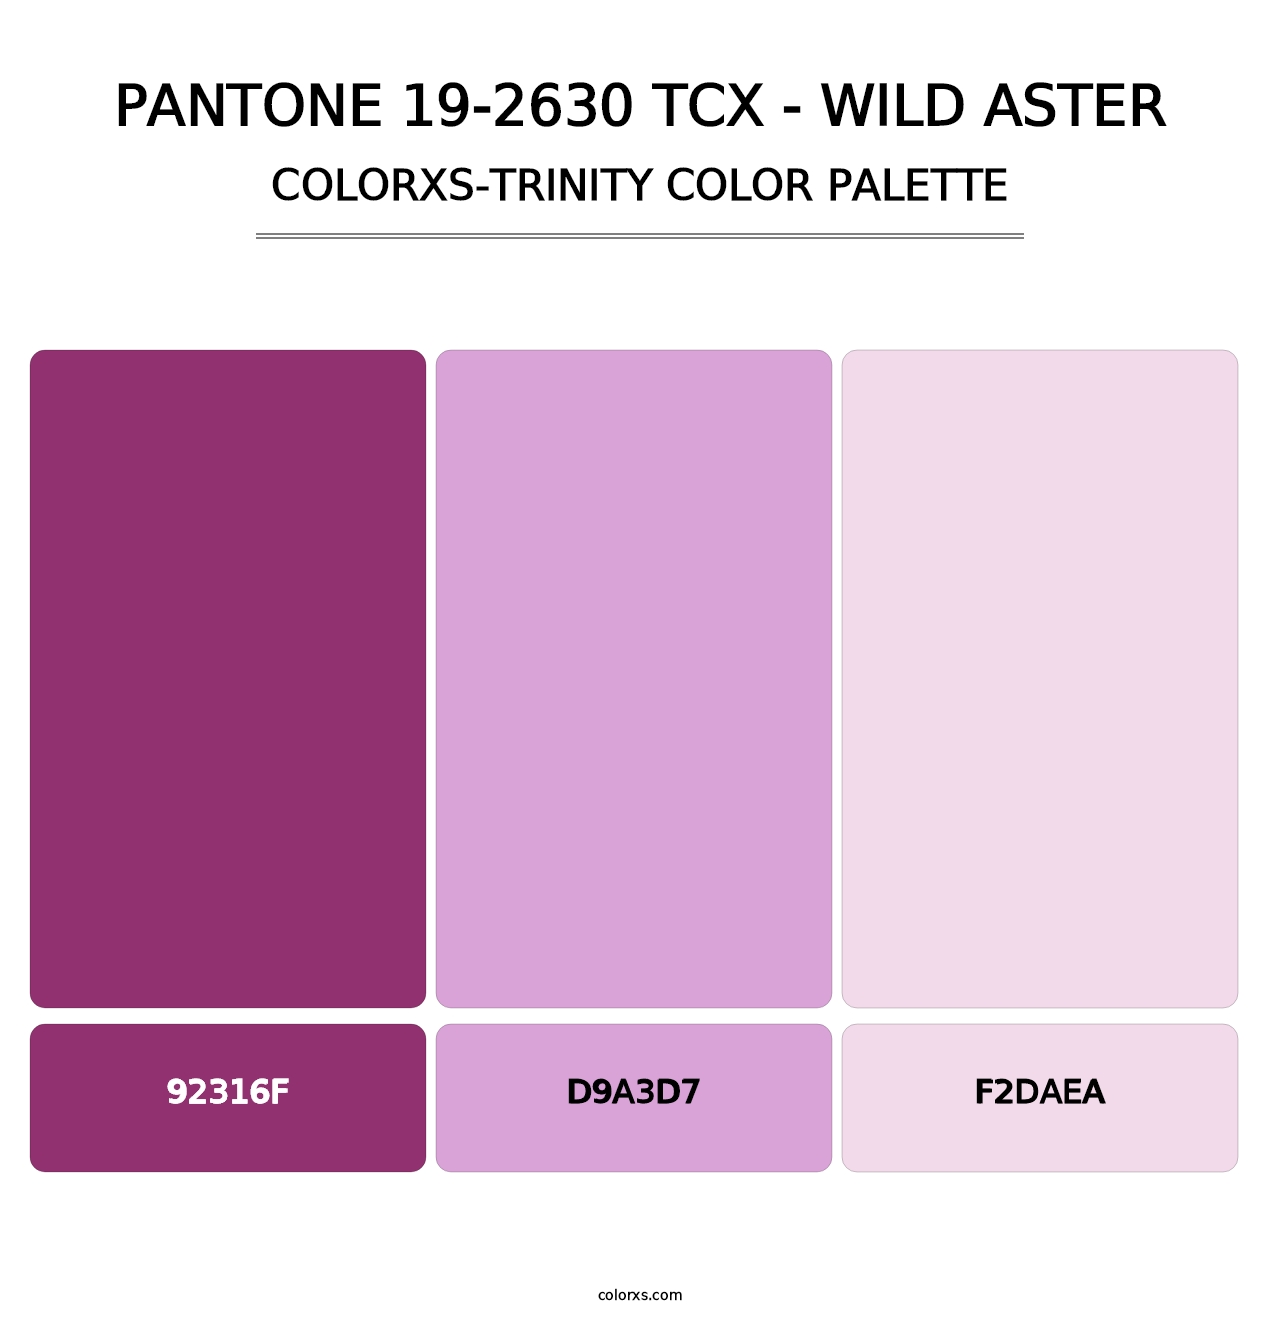 PANTONE 19-2630 TCX - Wild Aster - Colorxs Trinity Palette